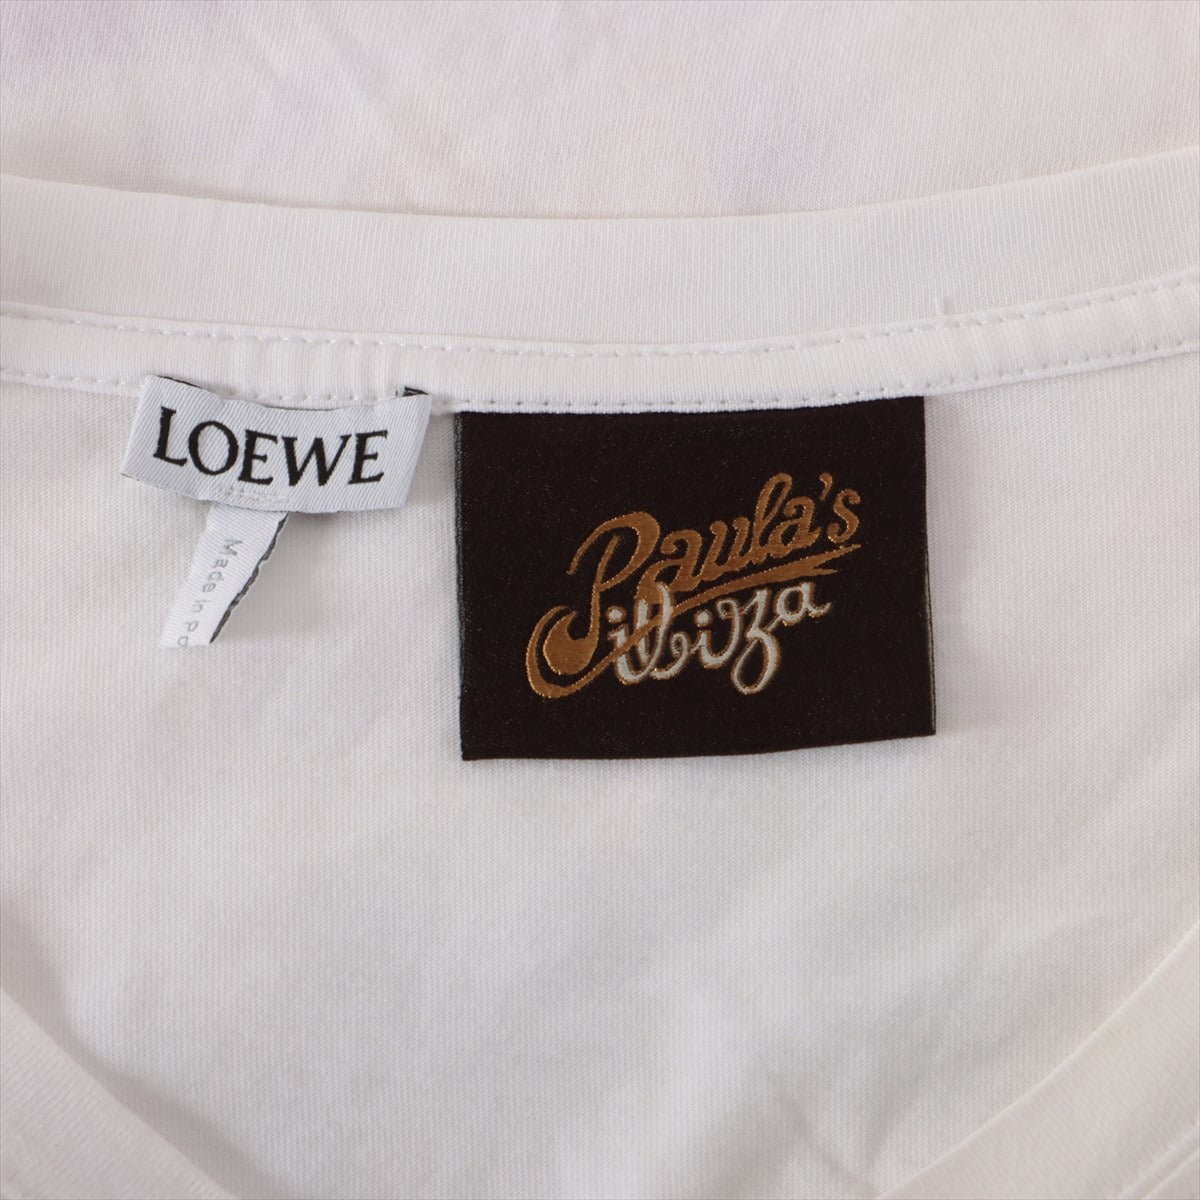 Loewe x Paula's Ibiza 20SS Cotton T-shirt L Ladies' White  Flower